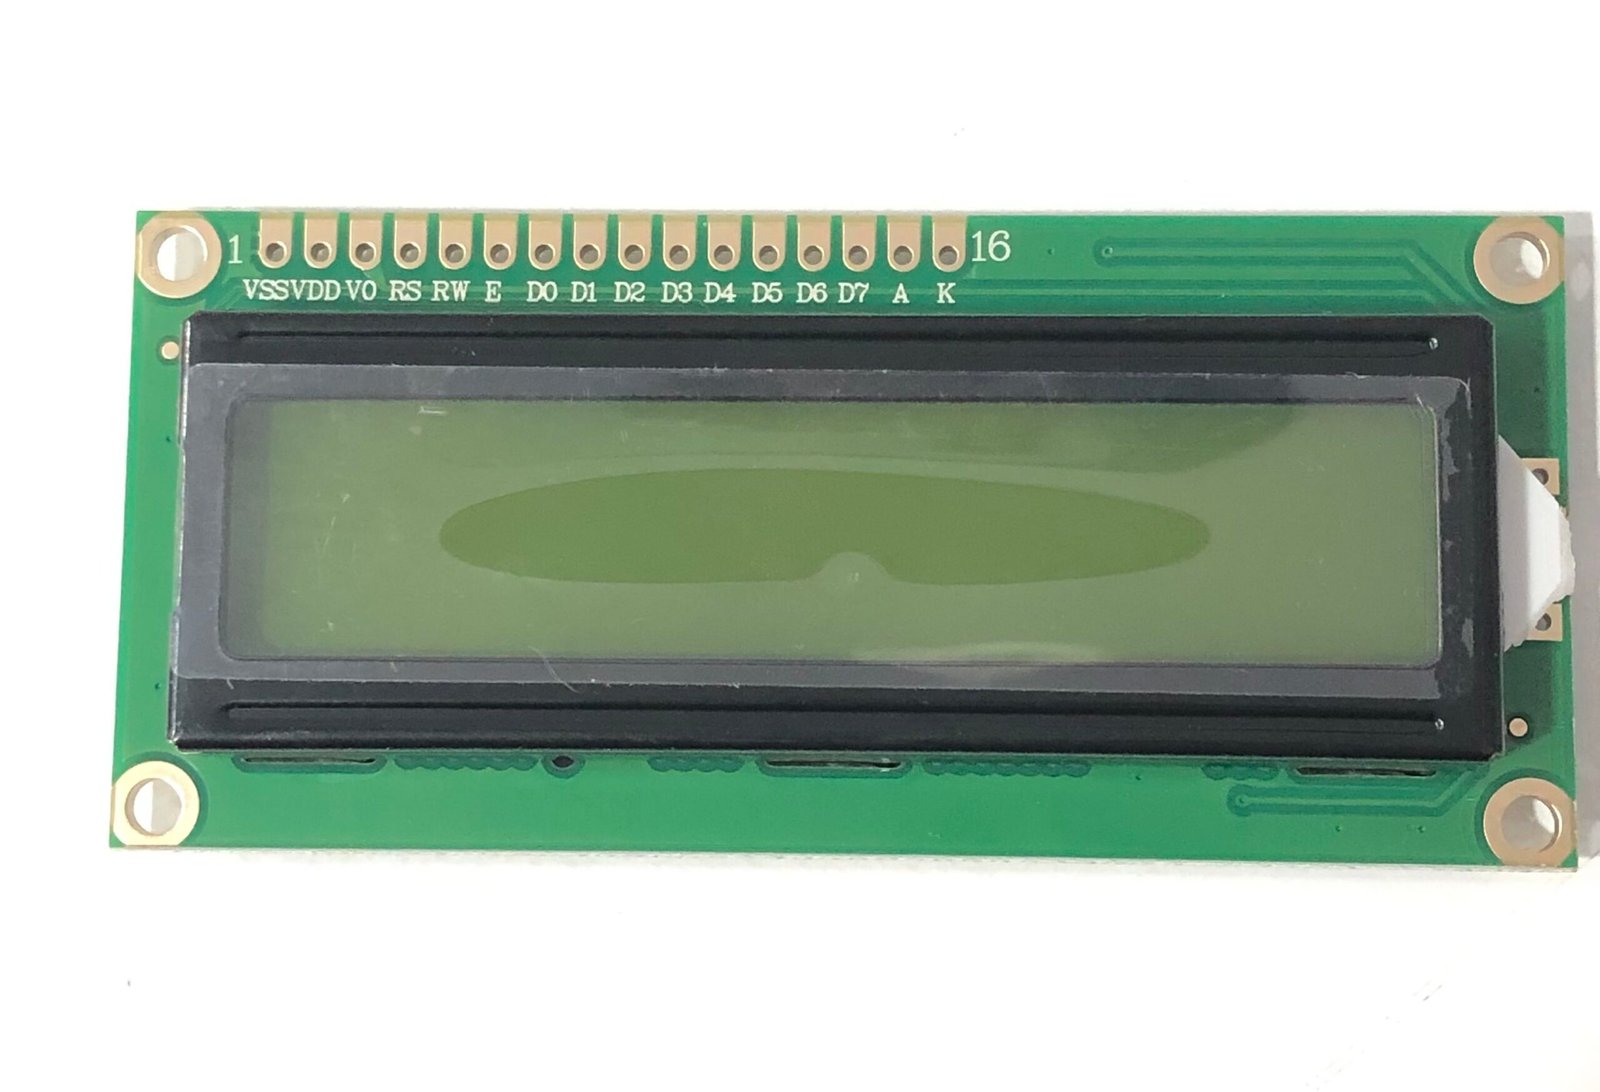 Roboway 1602 Green Backlight LCD Display 16x2 Character